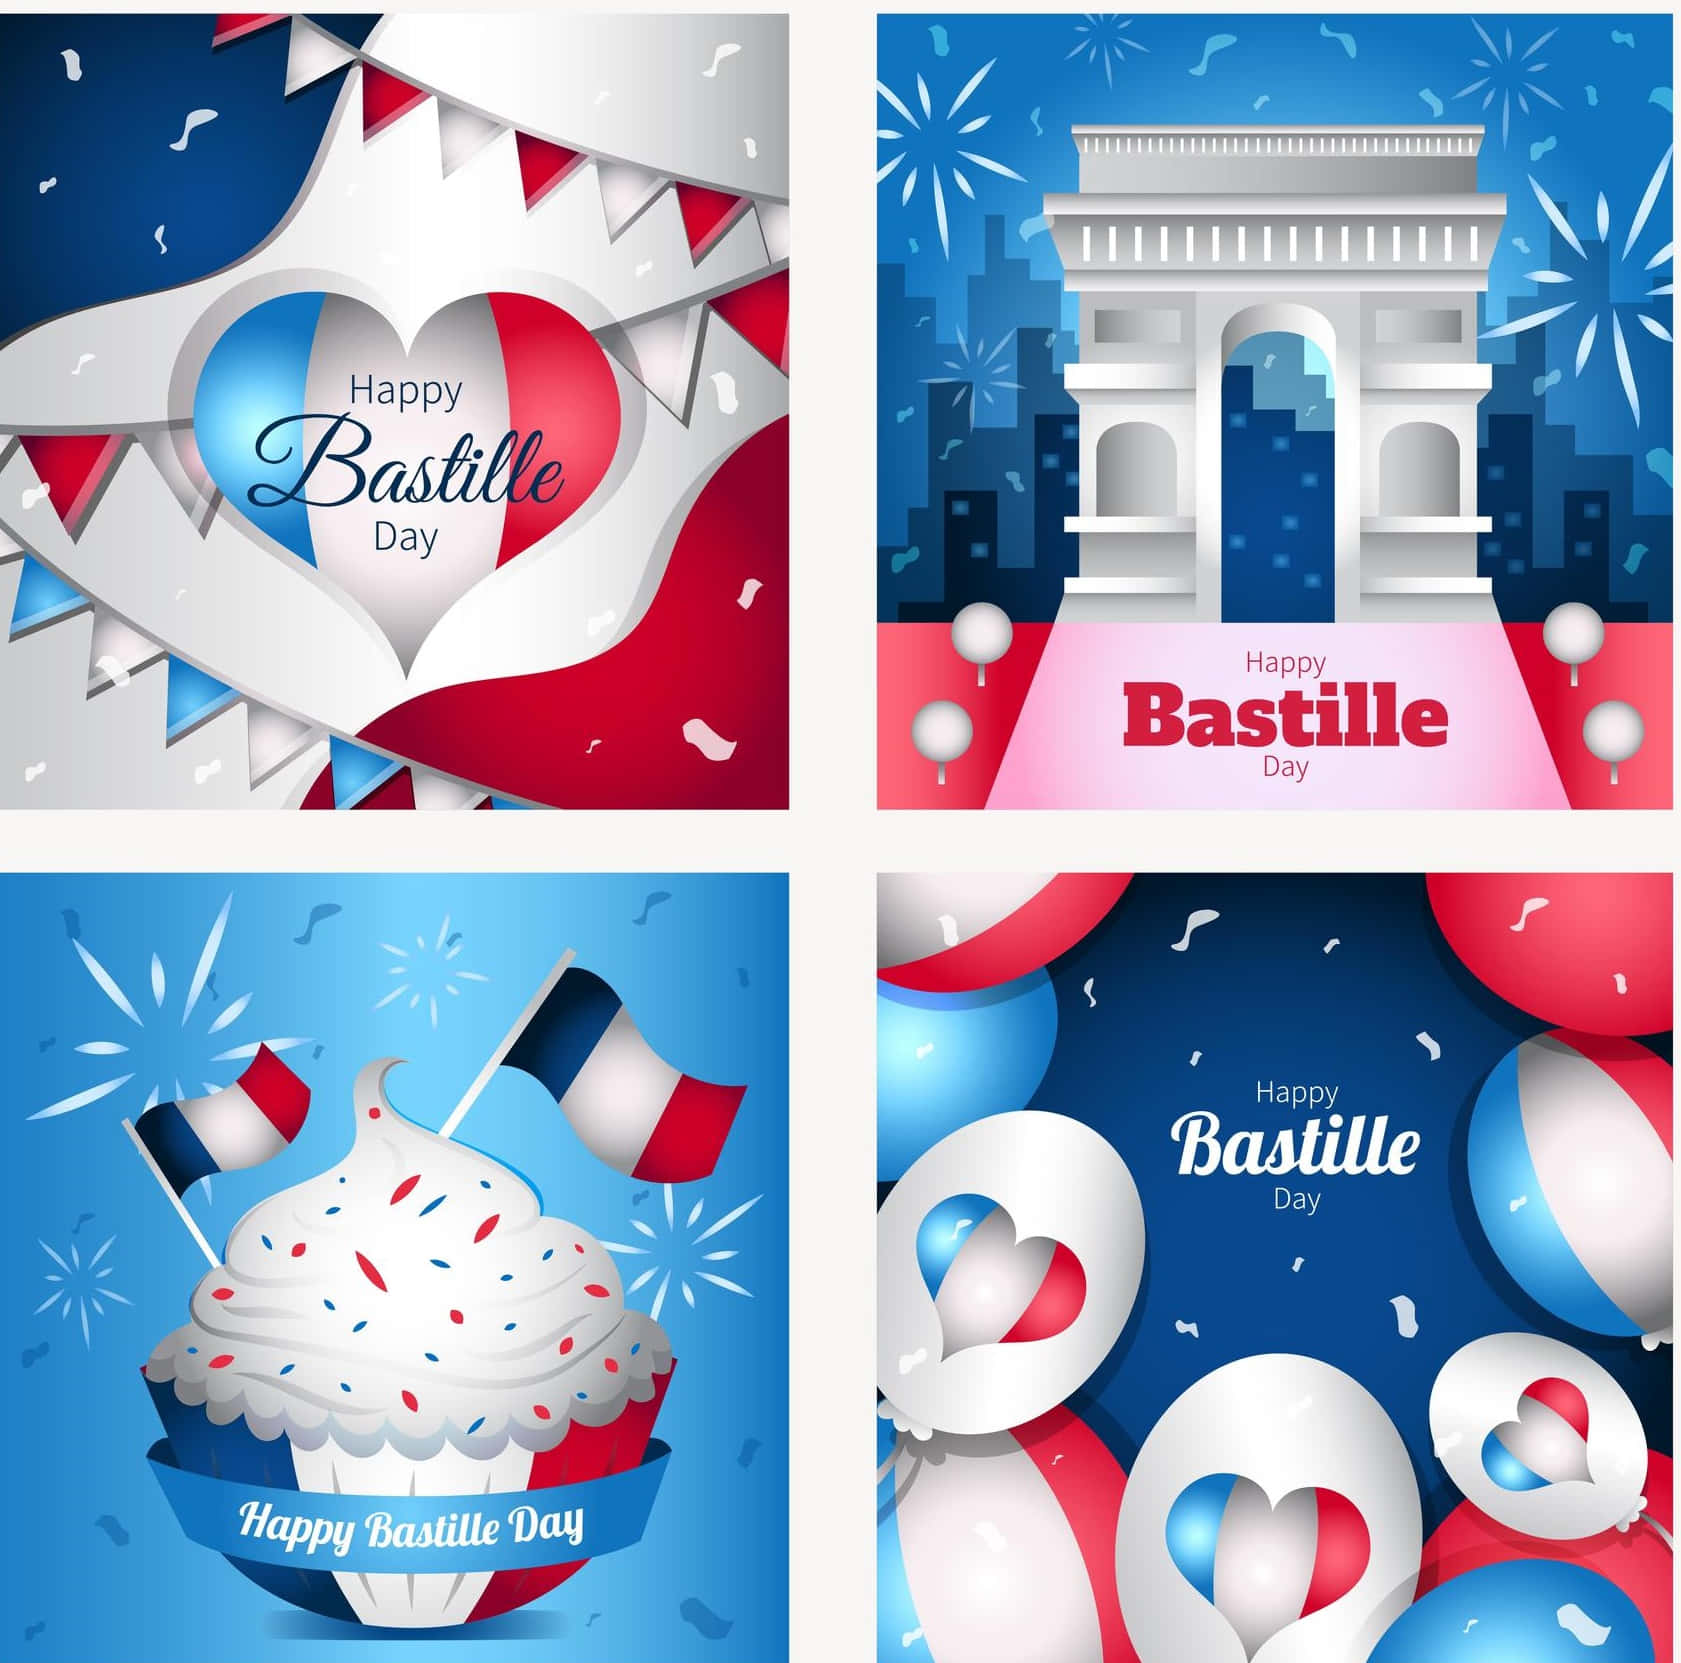 Celebrating Bastille Day In France